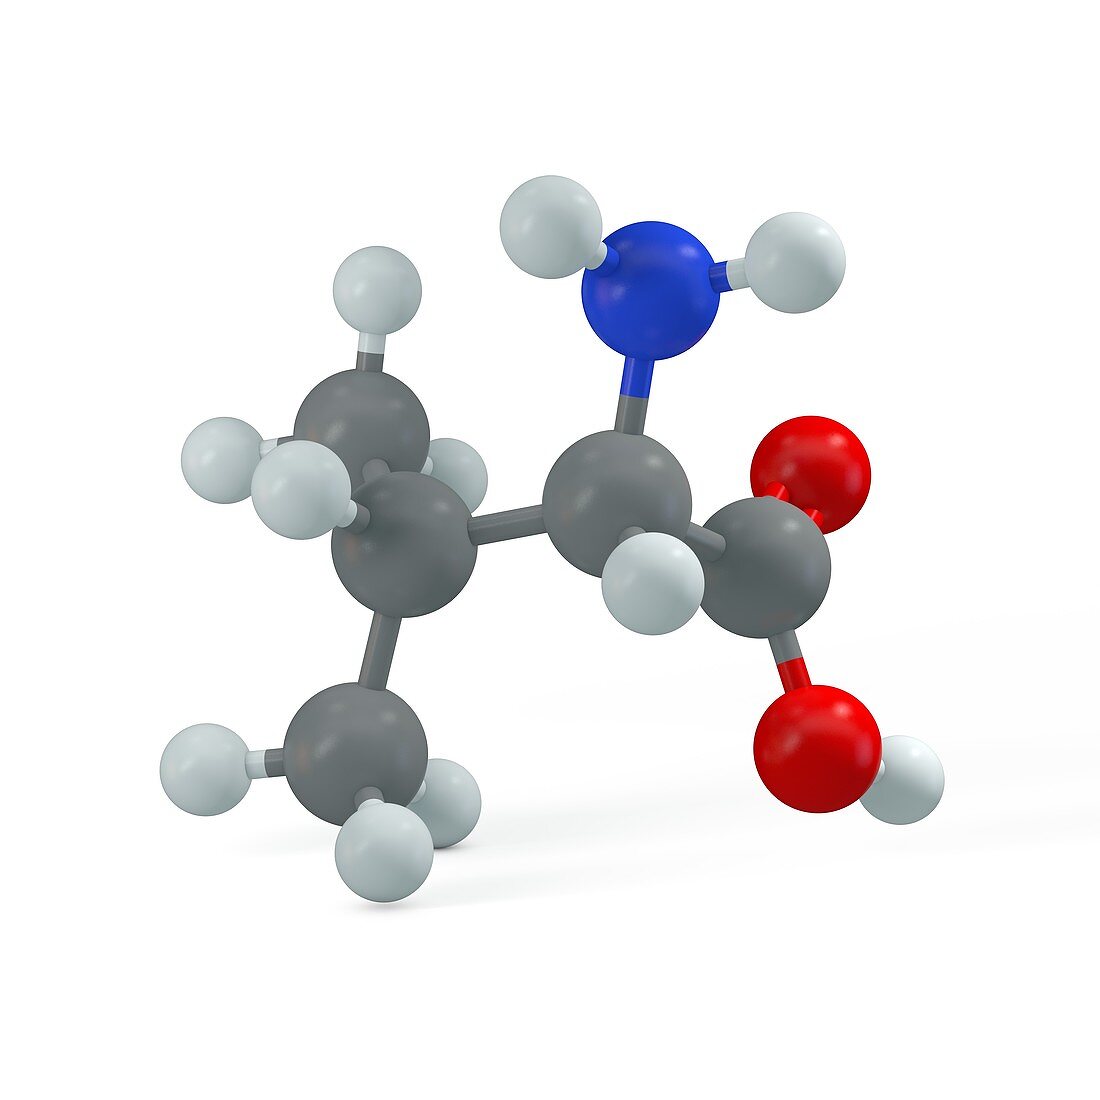 Valine molecule, illustration